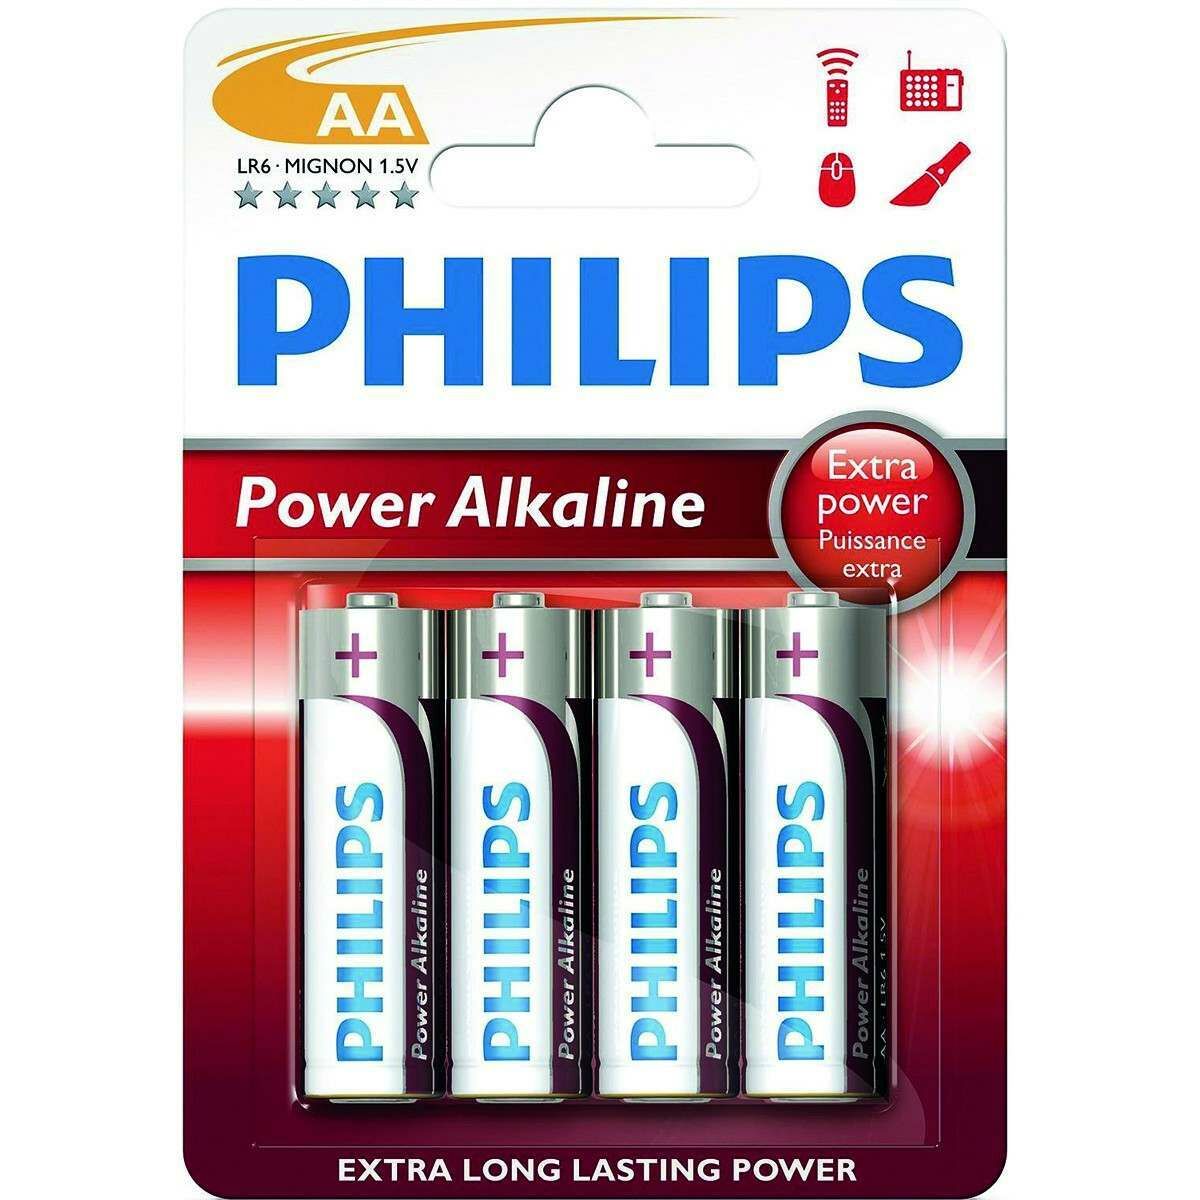 Philips Power Alkaline AA Batteries (Pack of 4) image 2